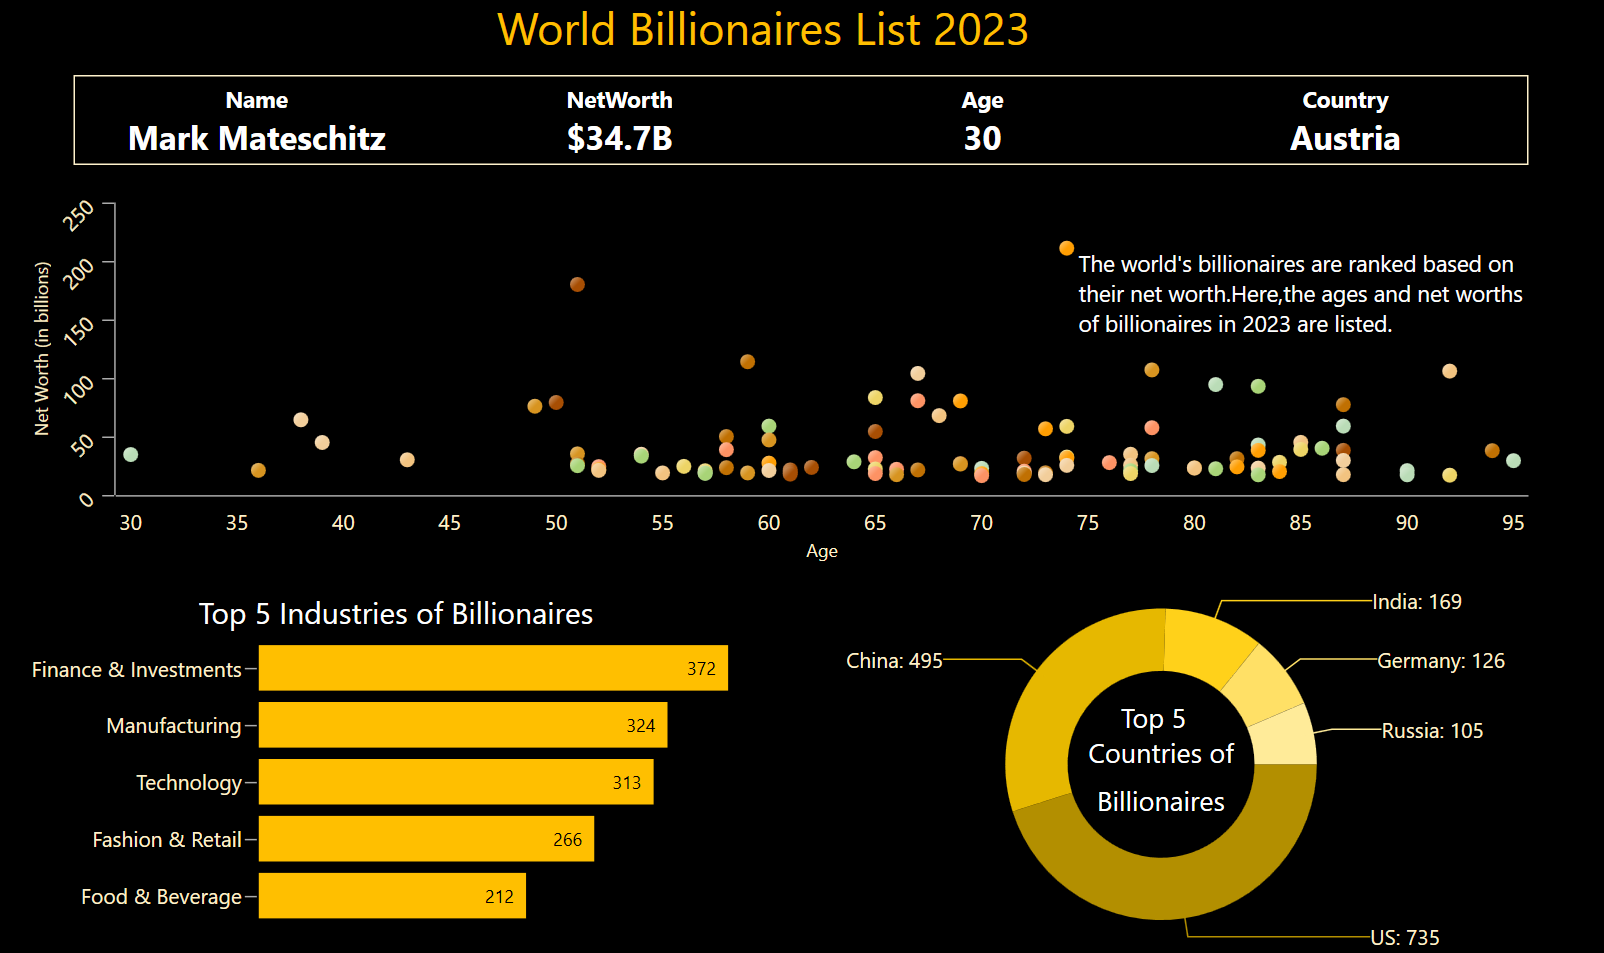 Visualizing billionaires data using WPF Chart controls